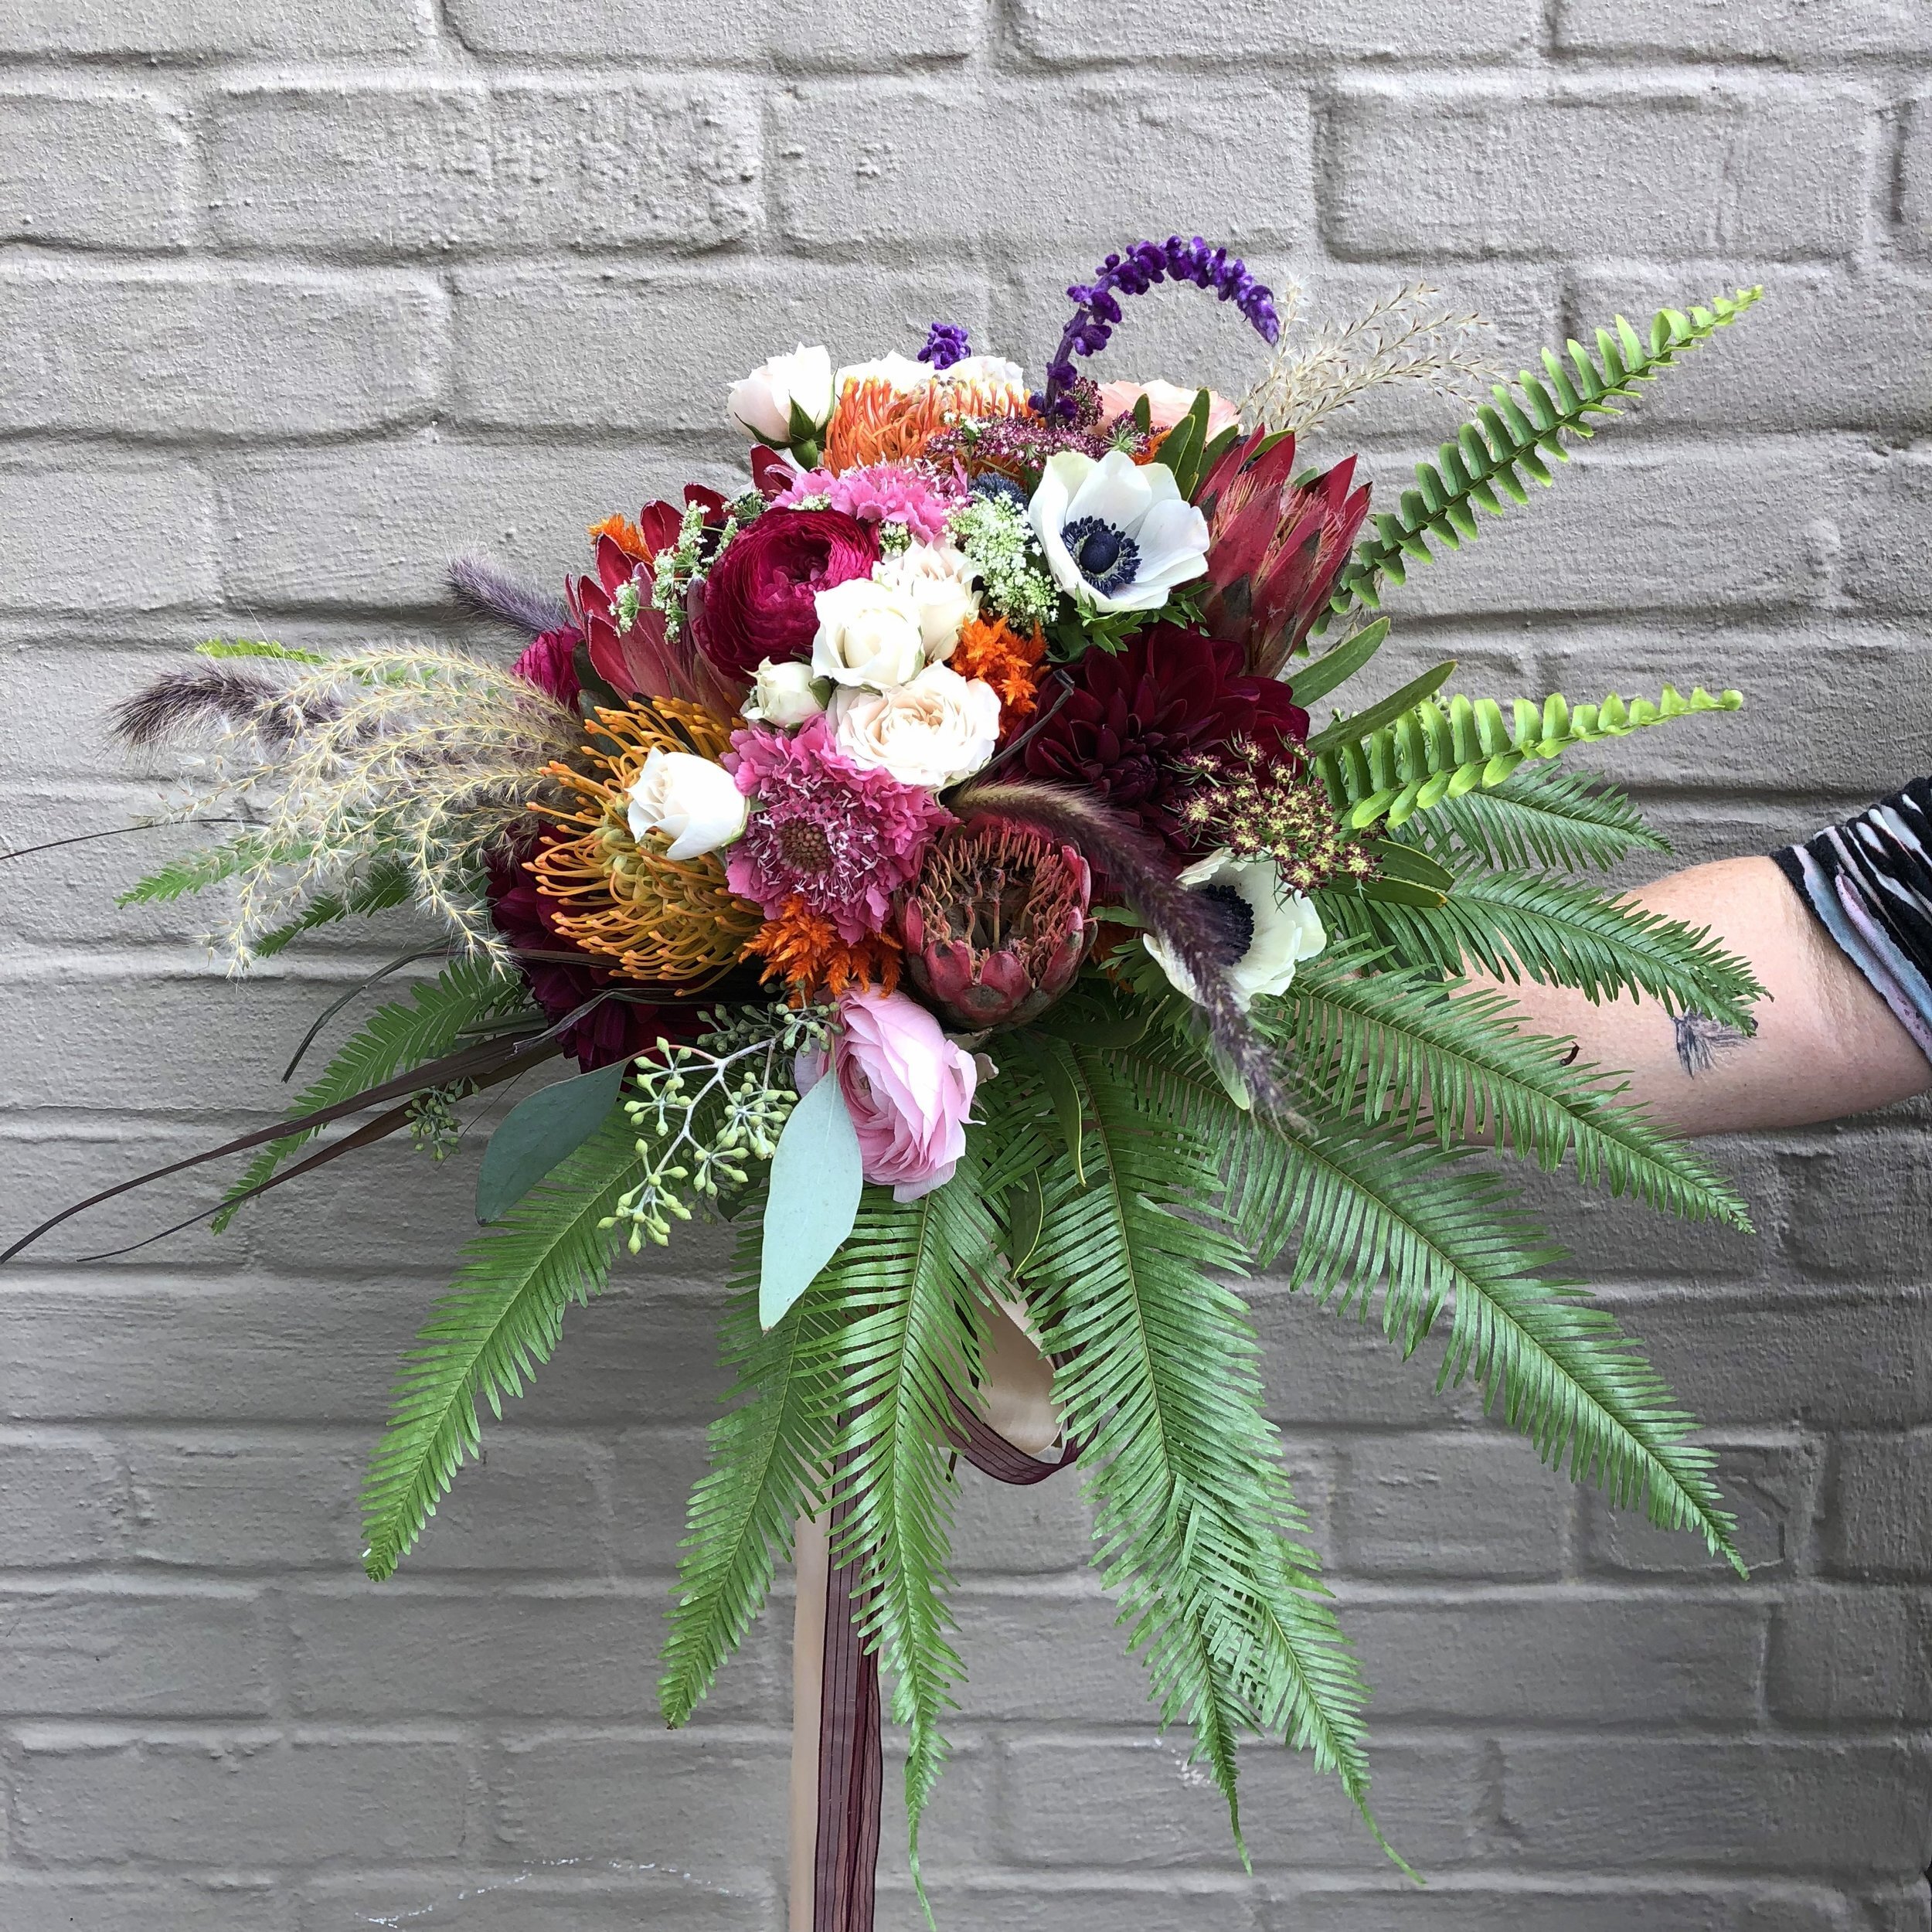 pincushion+protia+wedding+bouquet+anemone+solorful+vibrant.jpg